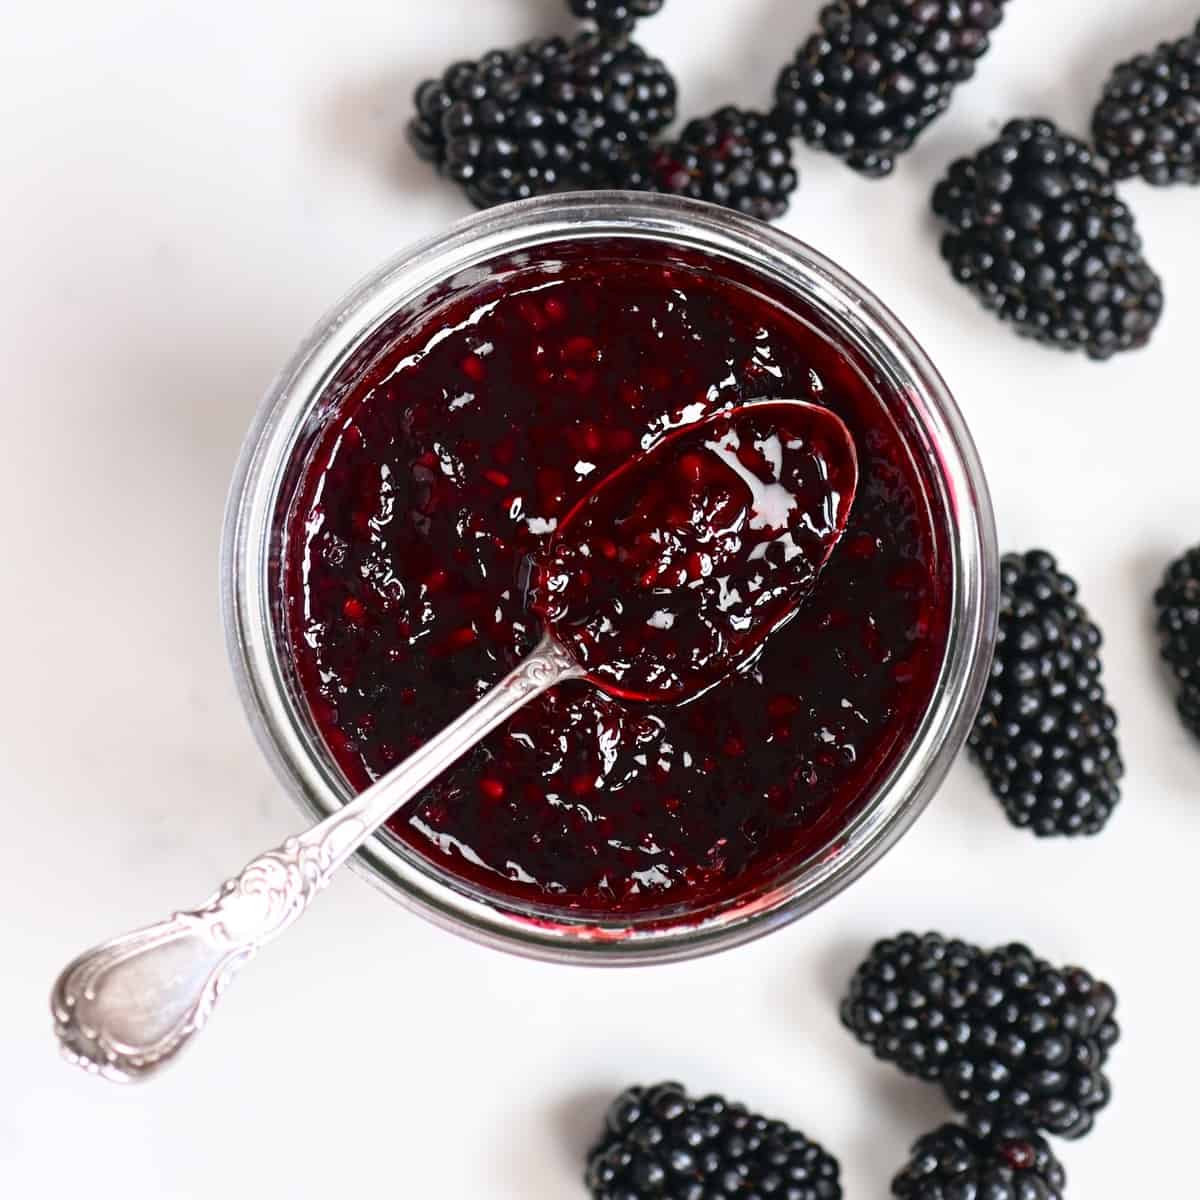 blackberry jam recipe